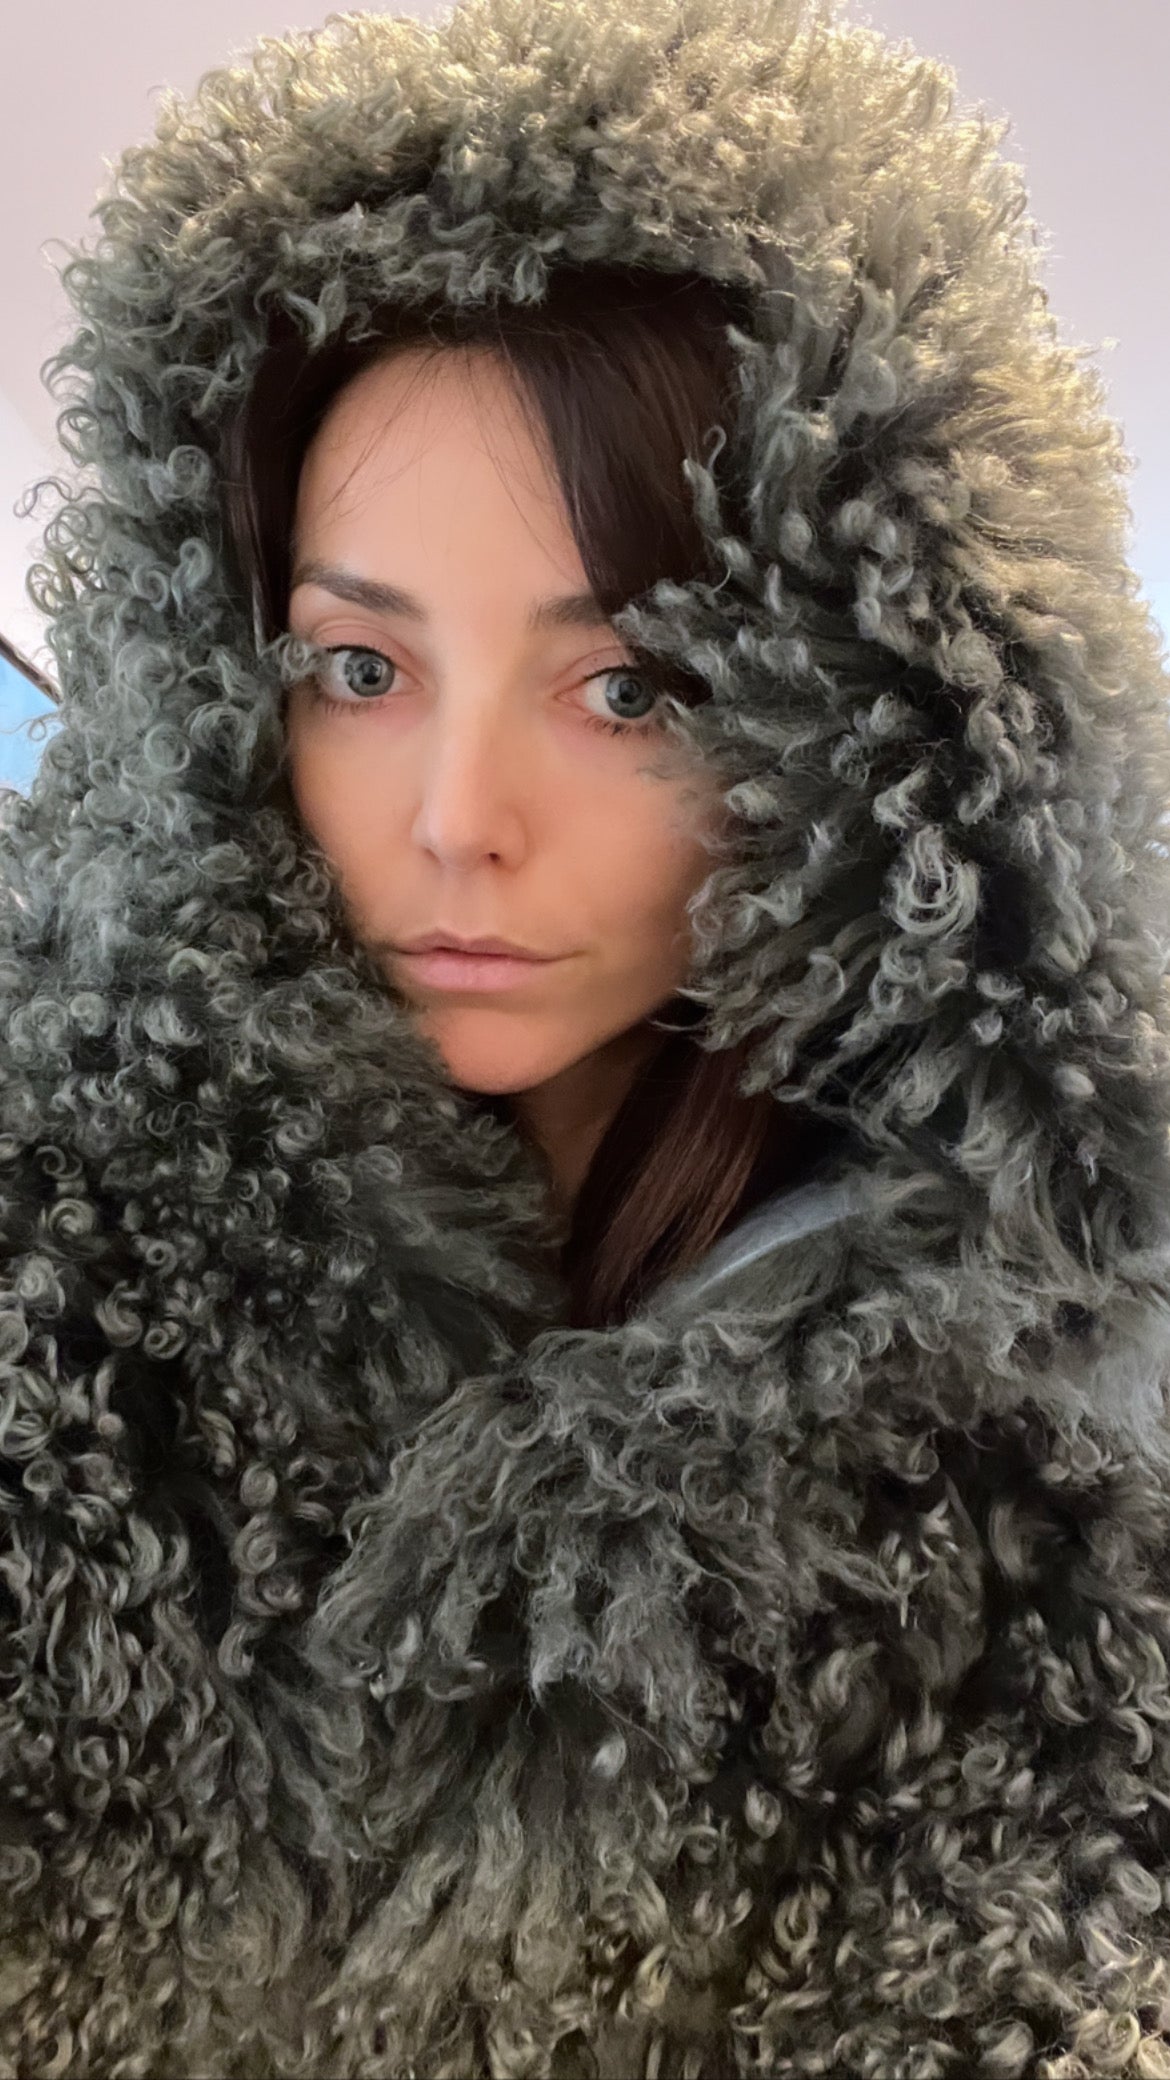 Oversized Fur Coat with Hoodie - M